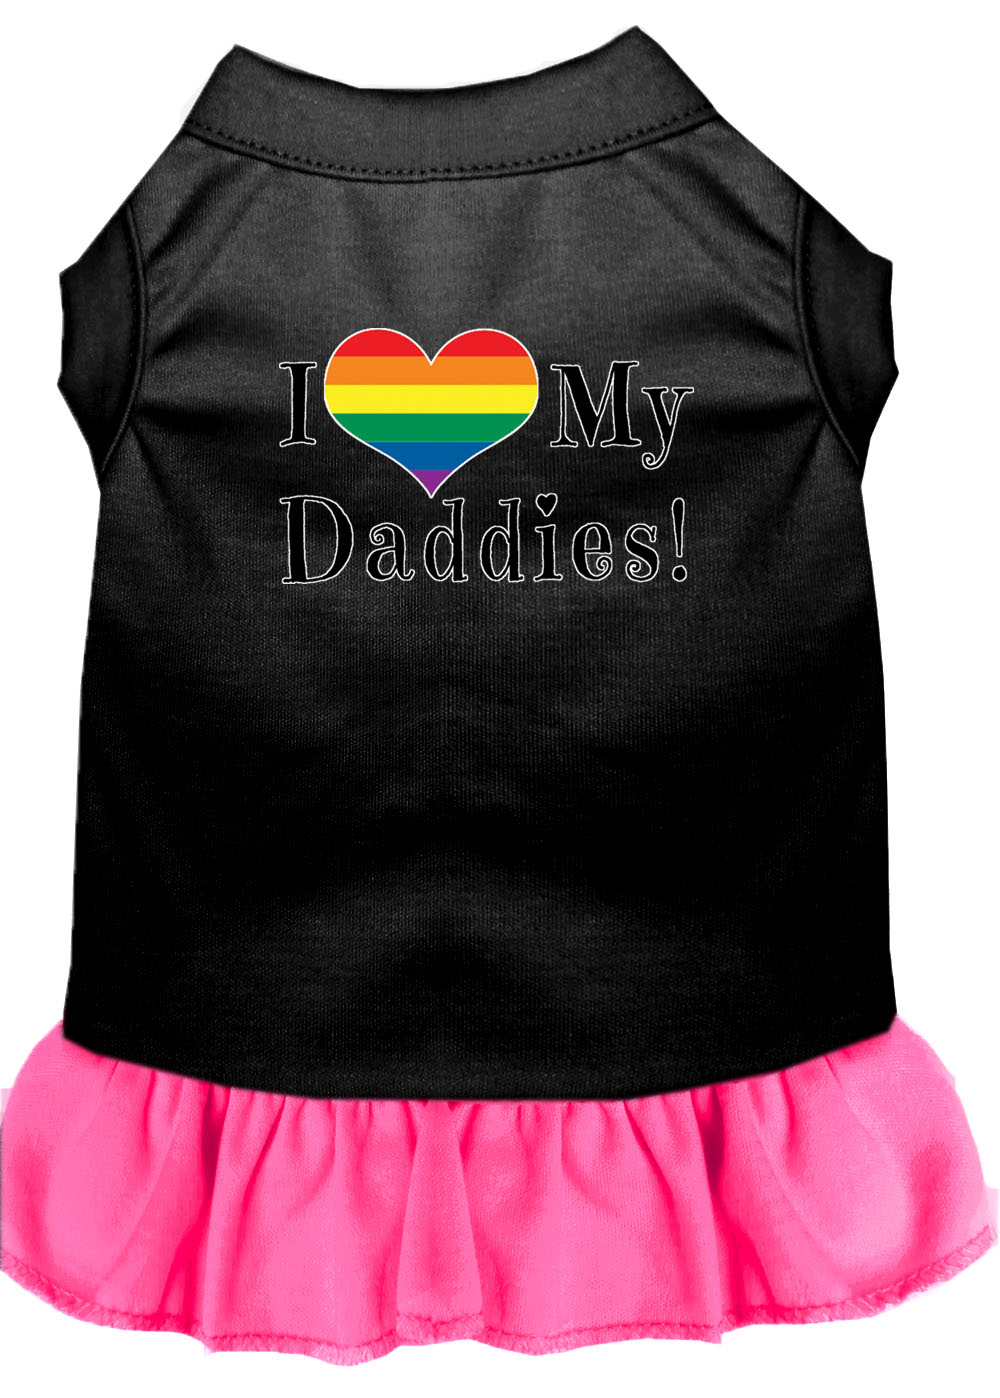 I Heart my Daddies Screen Print Dog Dress Black with Bright Pink Sm